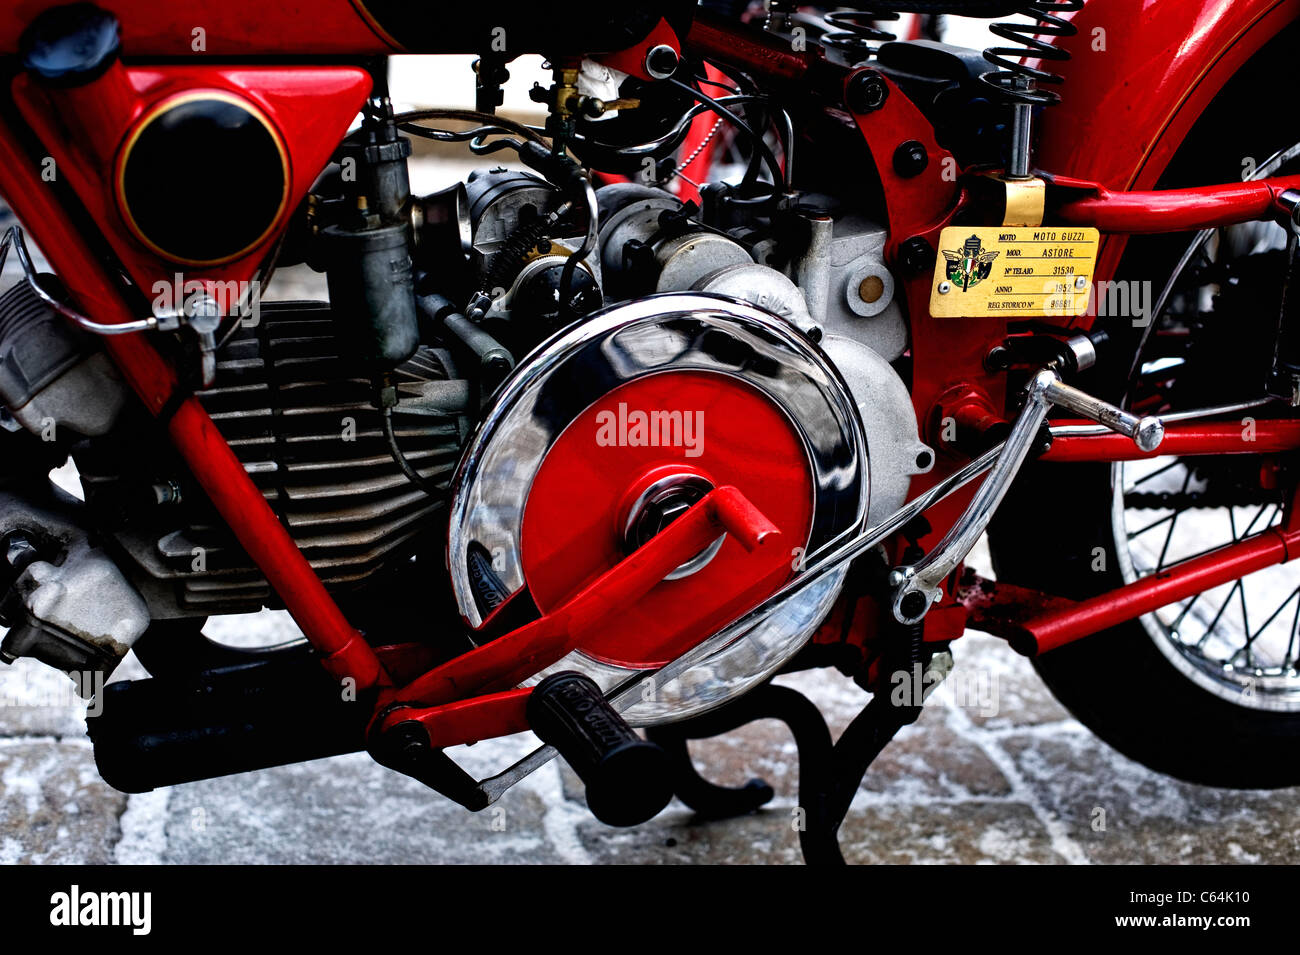 Details about   24085200 NOS Vintage Moto Guzzi Pin S269h